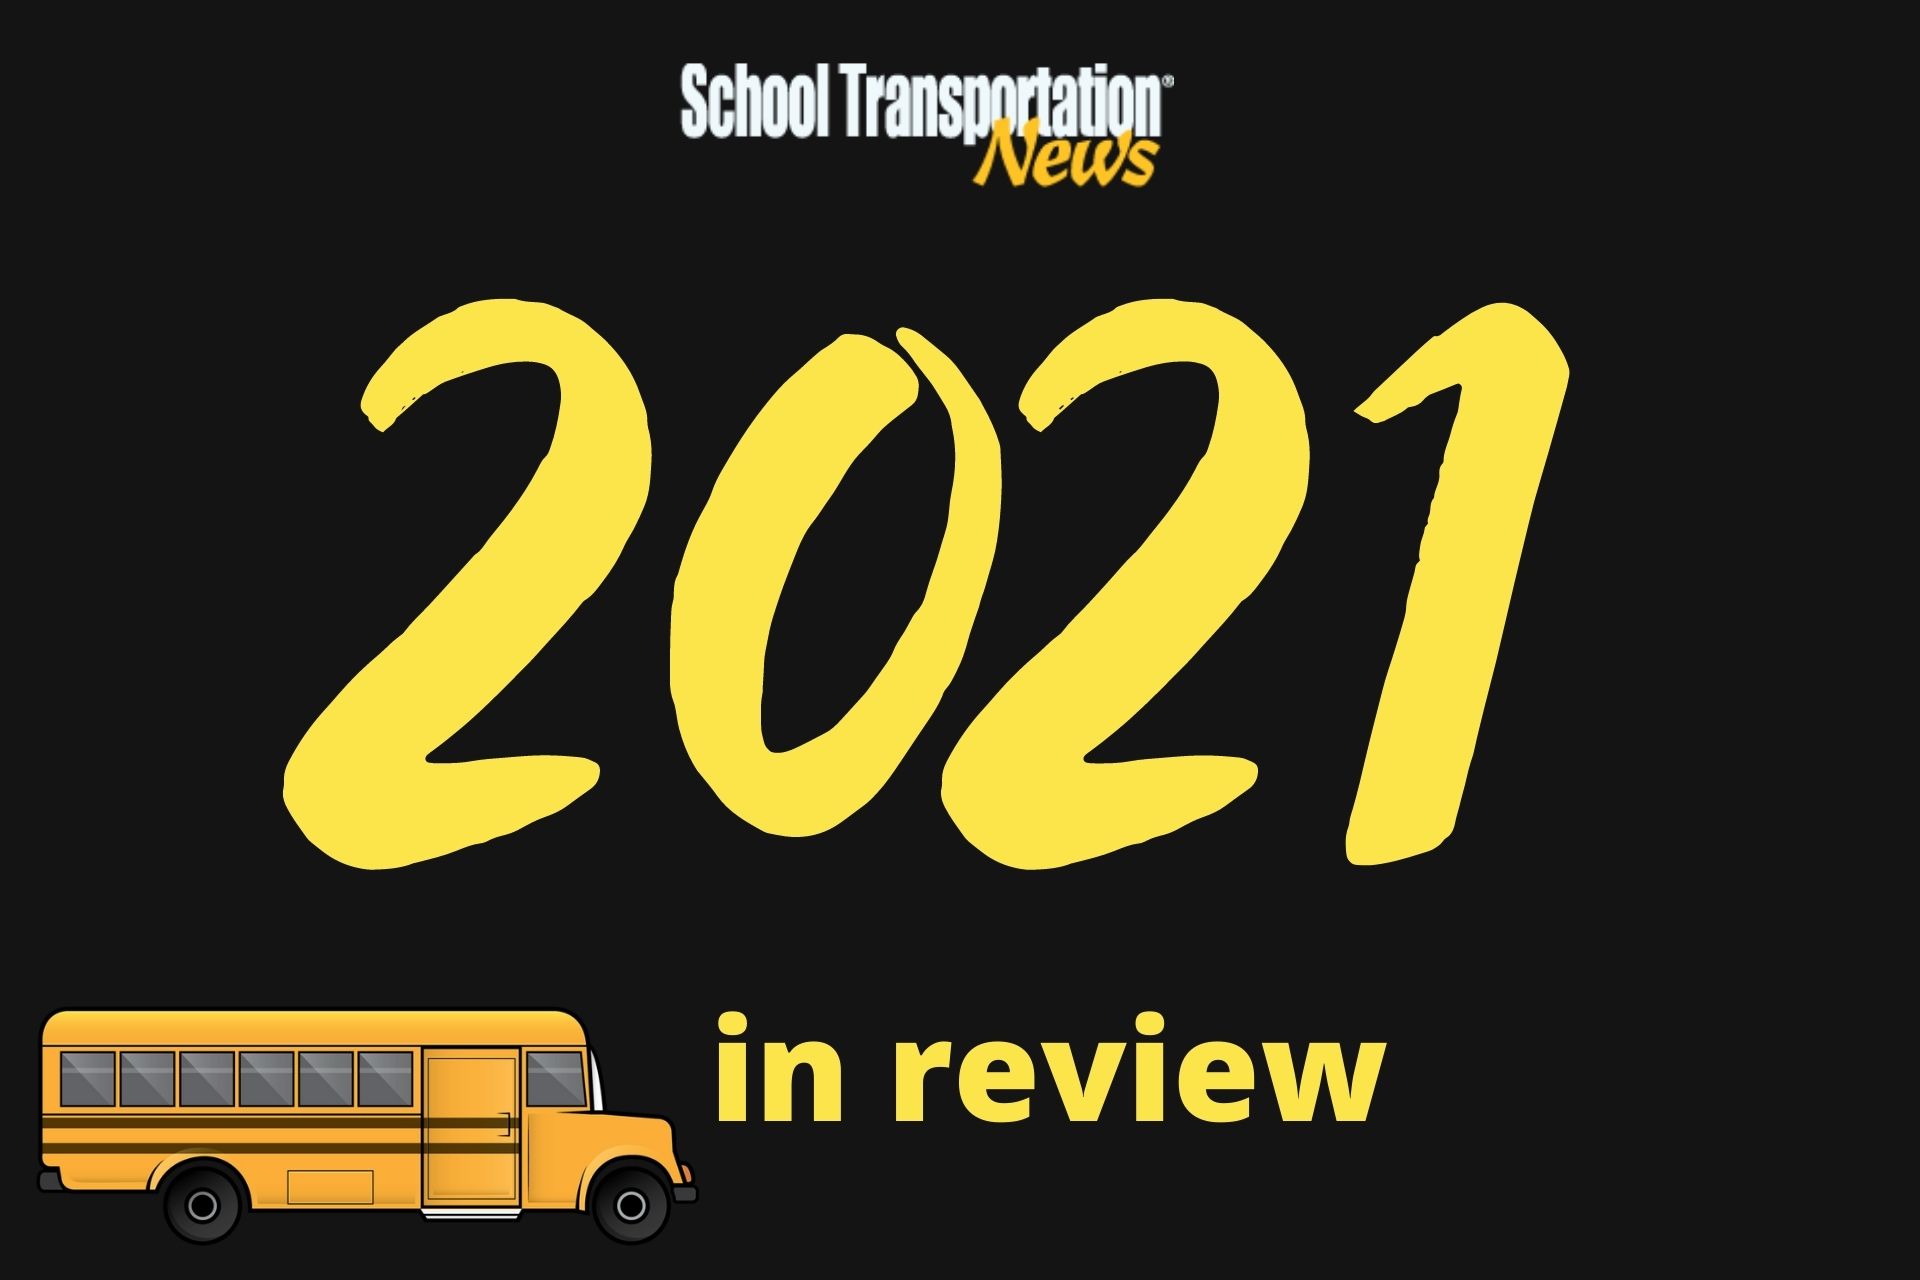 Top 10 School Transportation News Magazine Articles of 2021